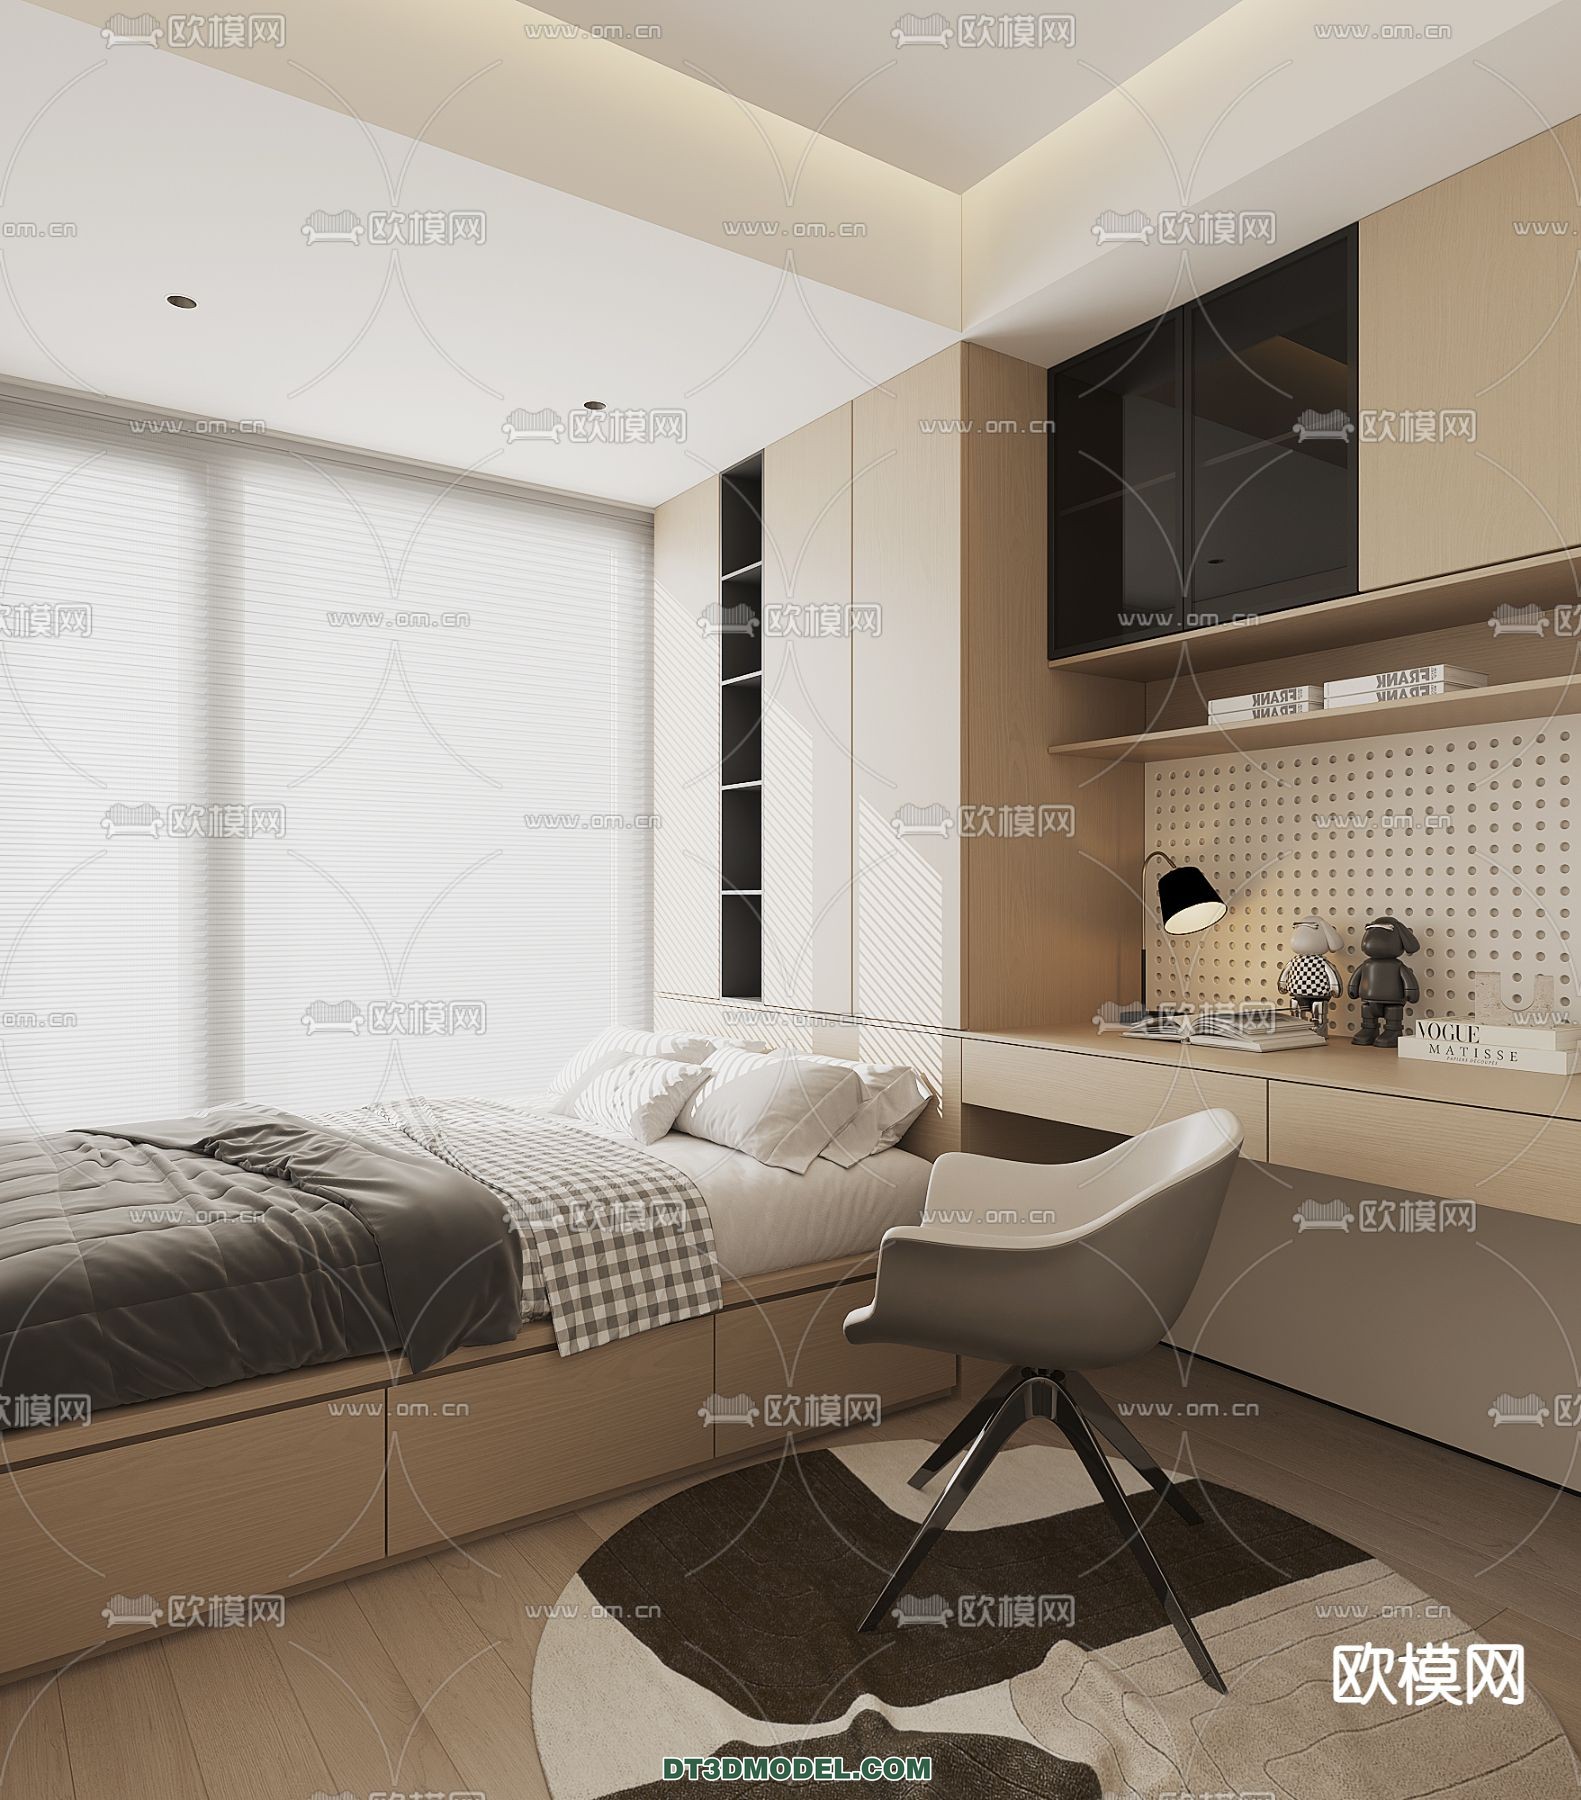 Tatami Bedroom – Japan Bedroom – 3D Scene – 005 - thumbnail 1